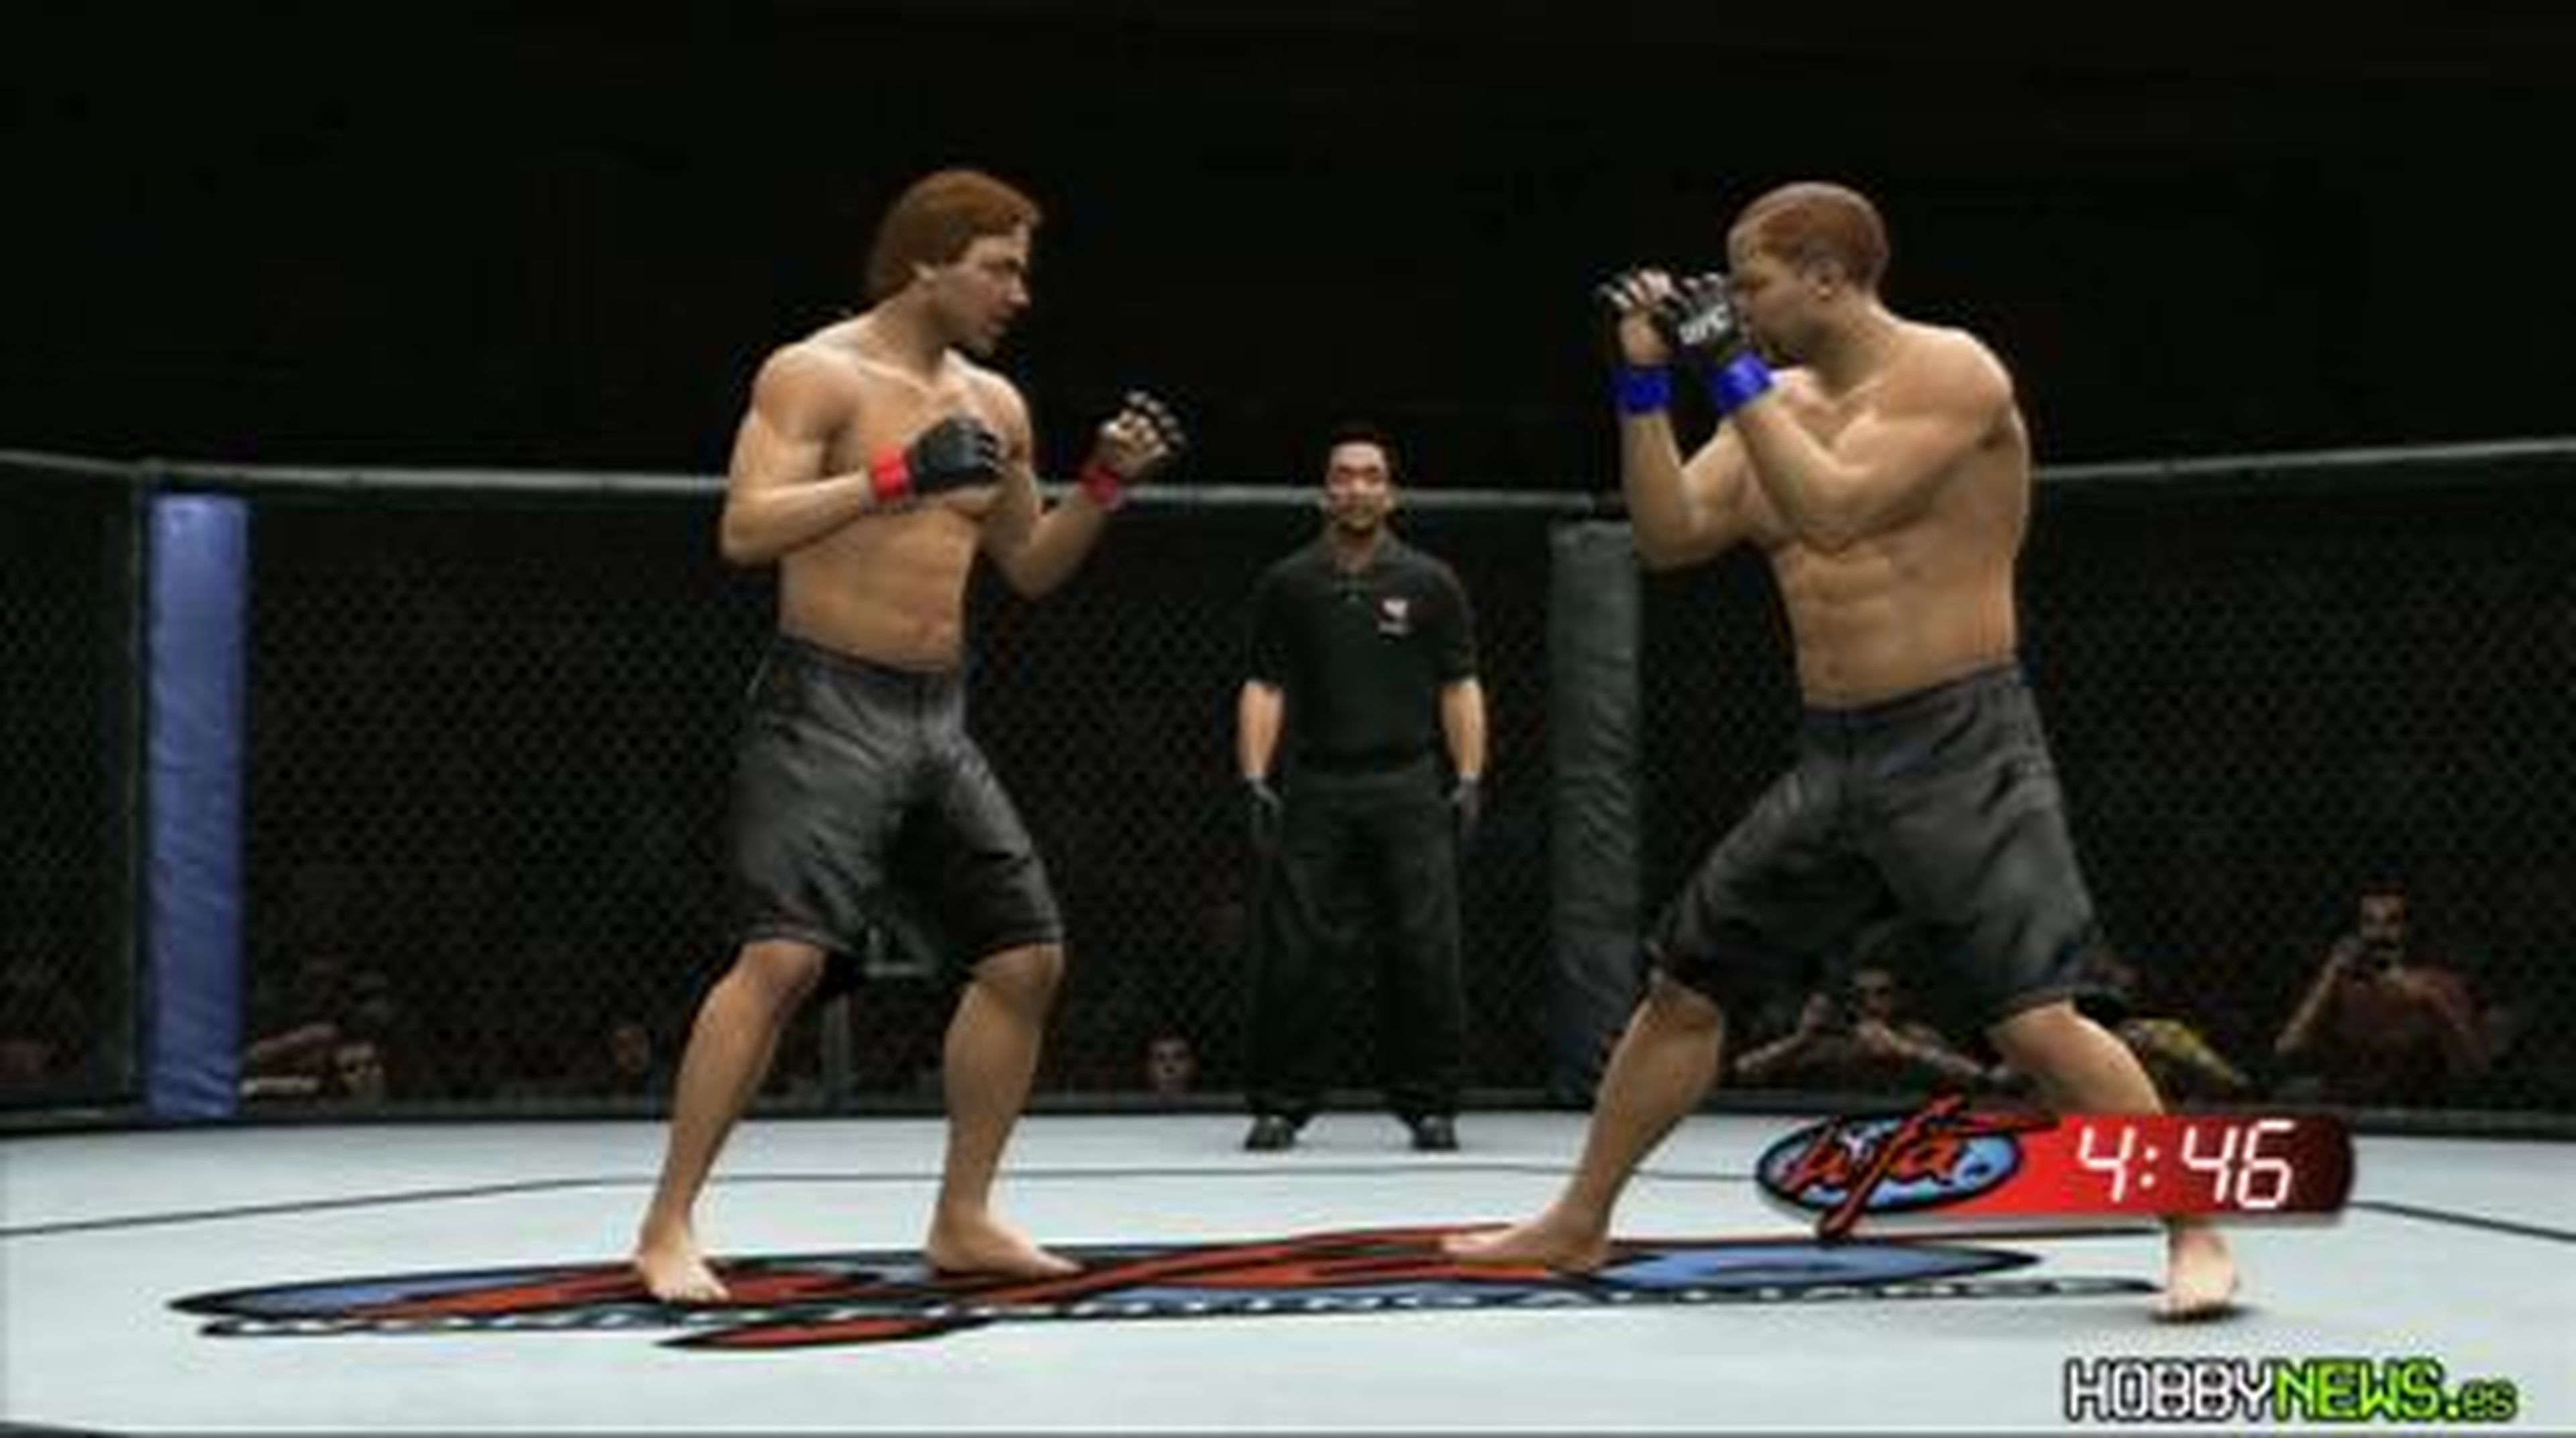 UFC Undisputed 3 (HD) Videoreview en HobbyNews.es